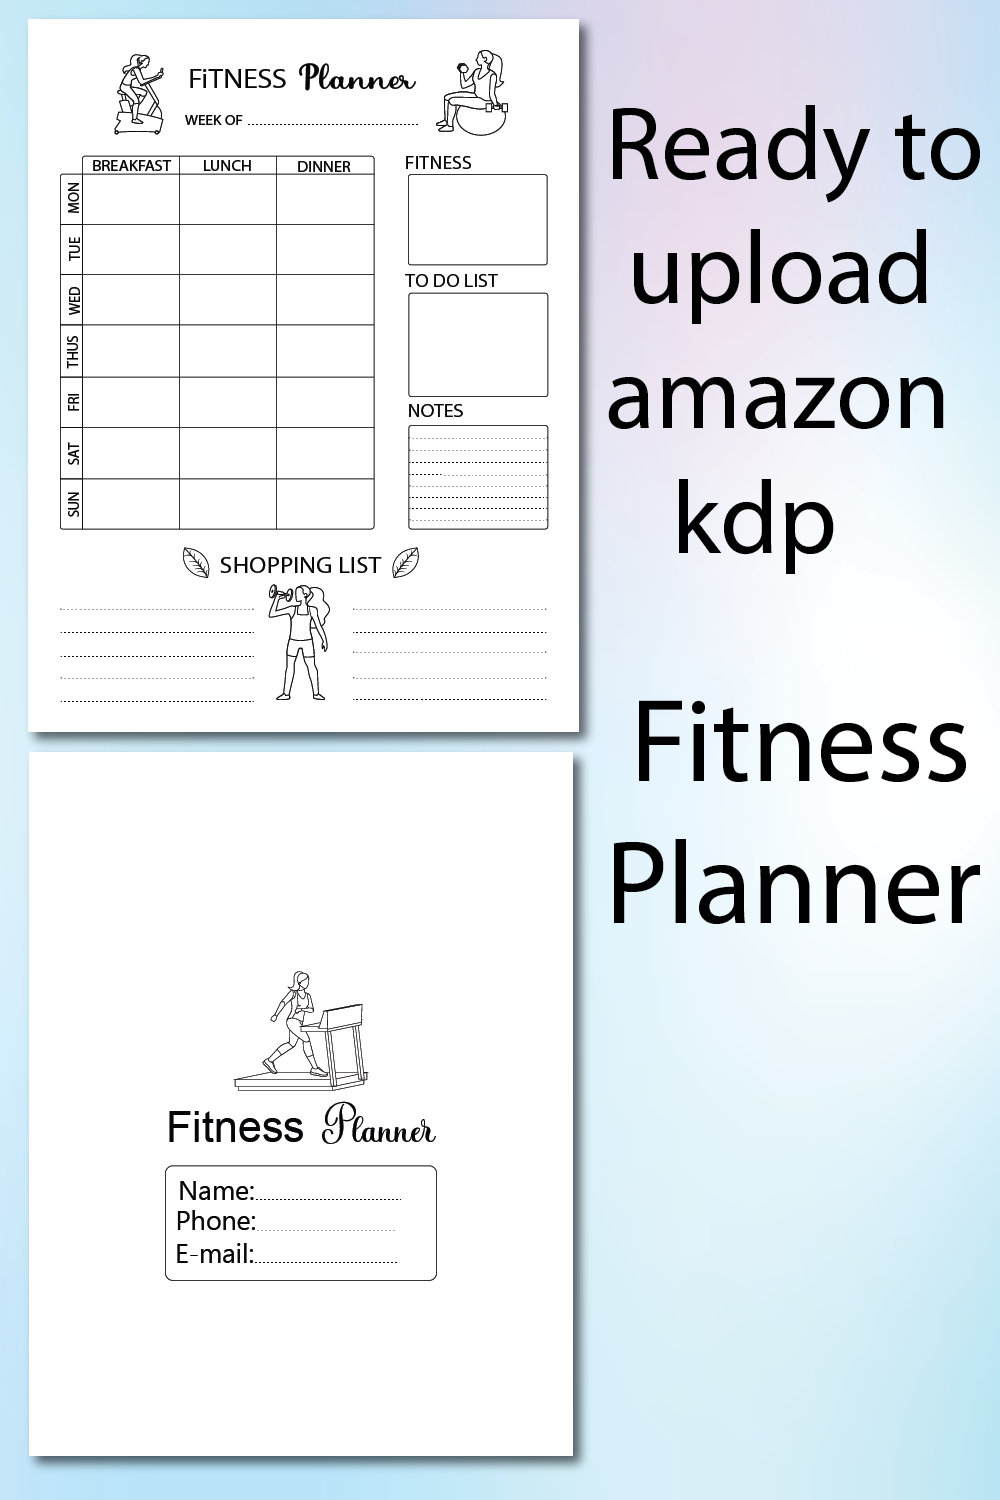 Fitness Planner KDP Interior pinterest image.